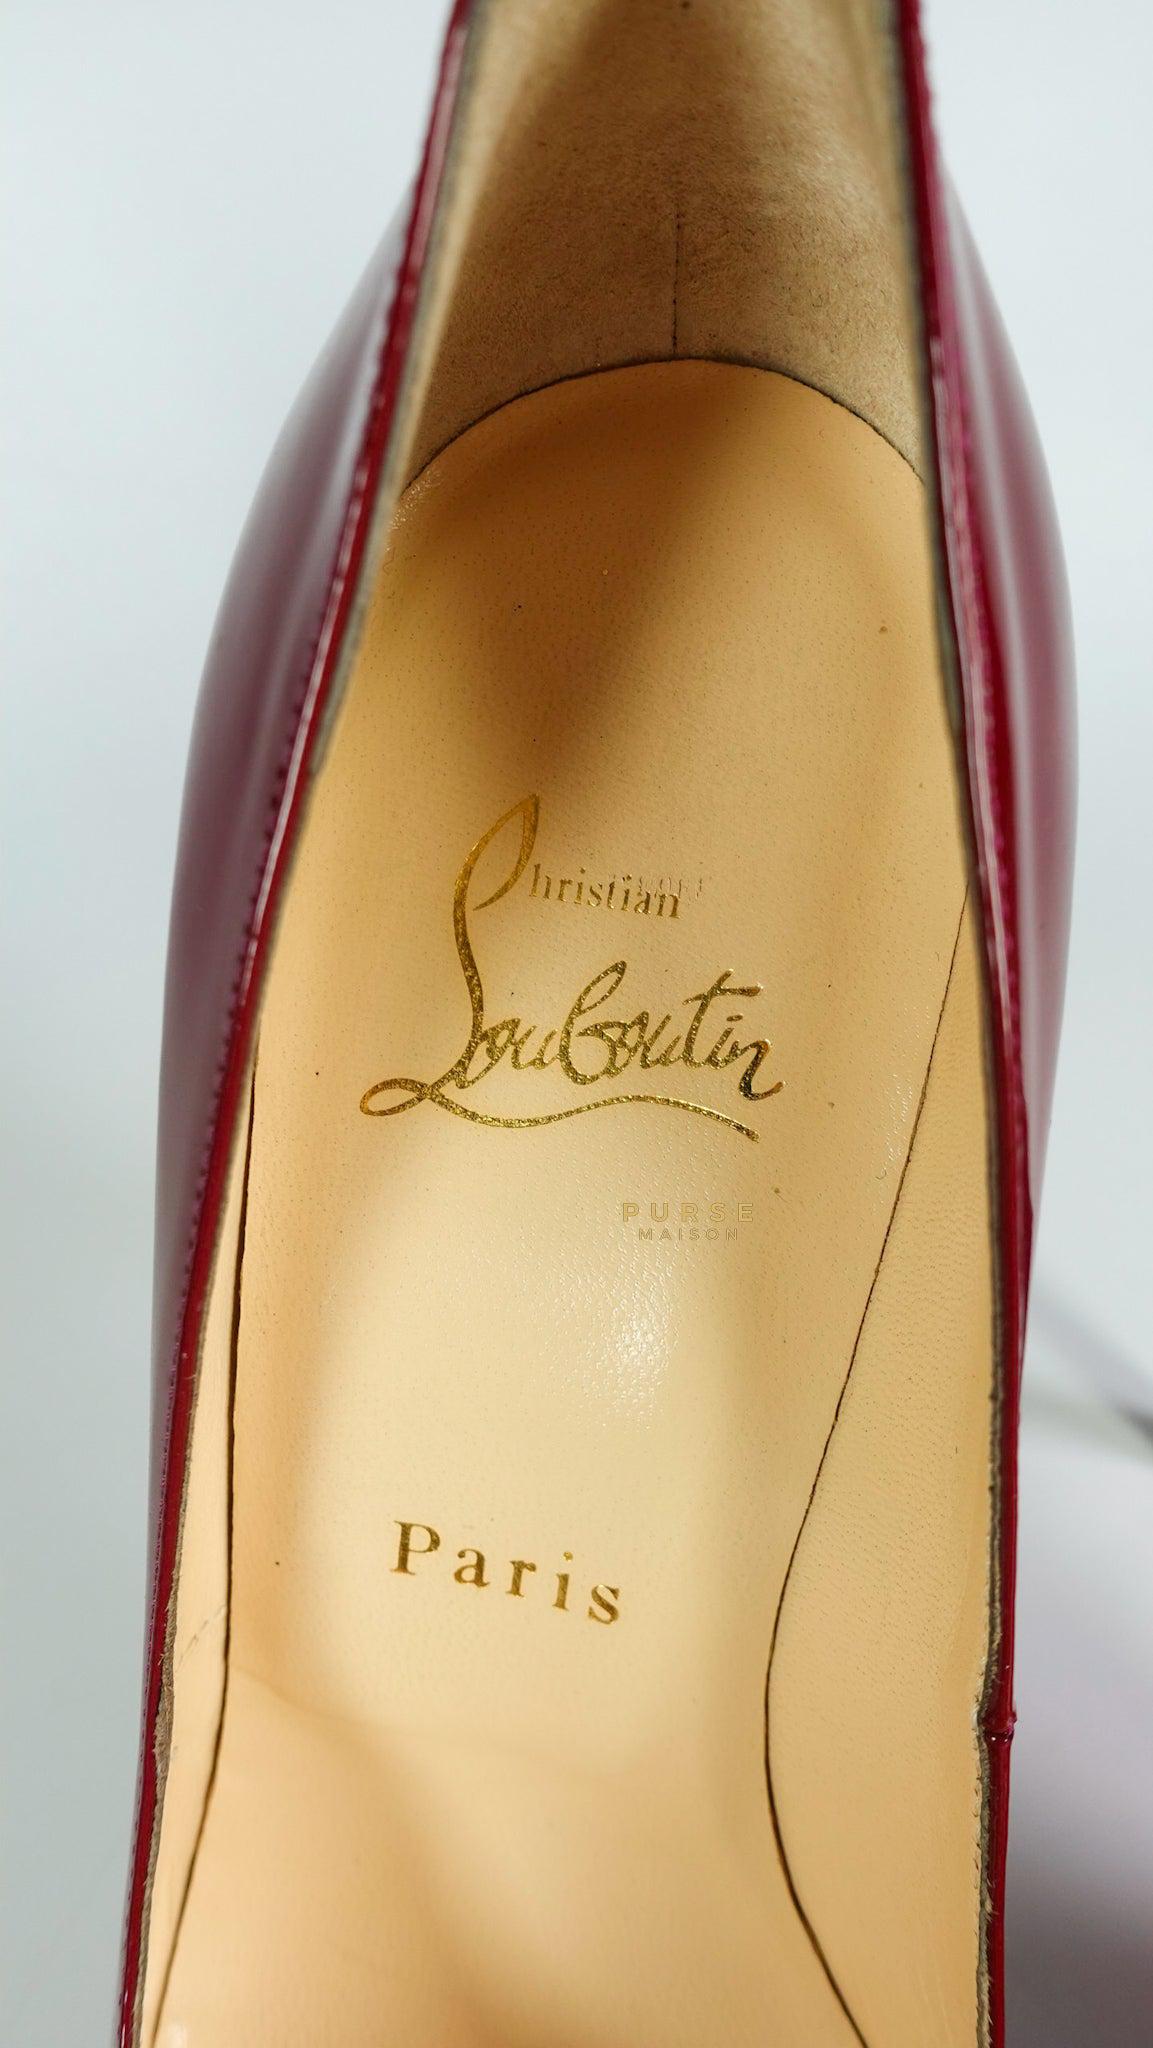 Christian Louboutin Palais Royal Red Patent High Heels Pump Size 37.5 EU (24cm)